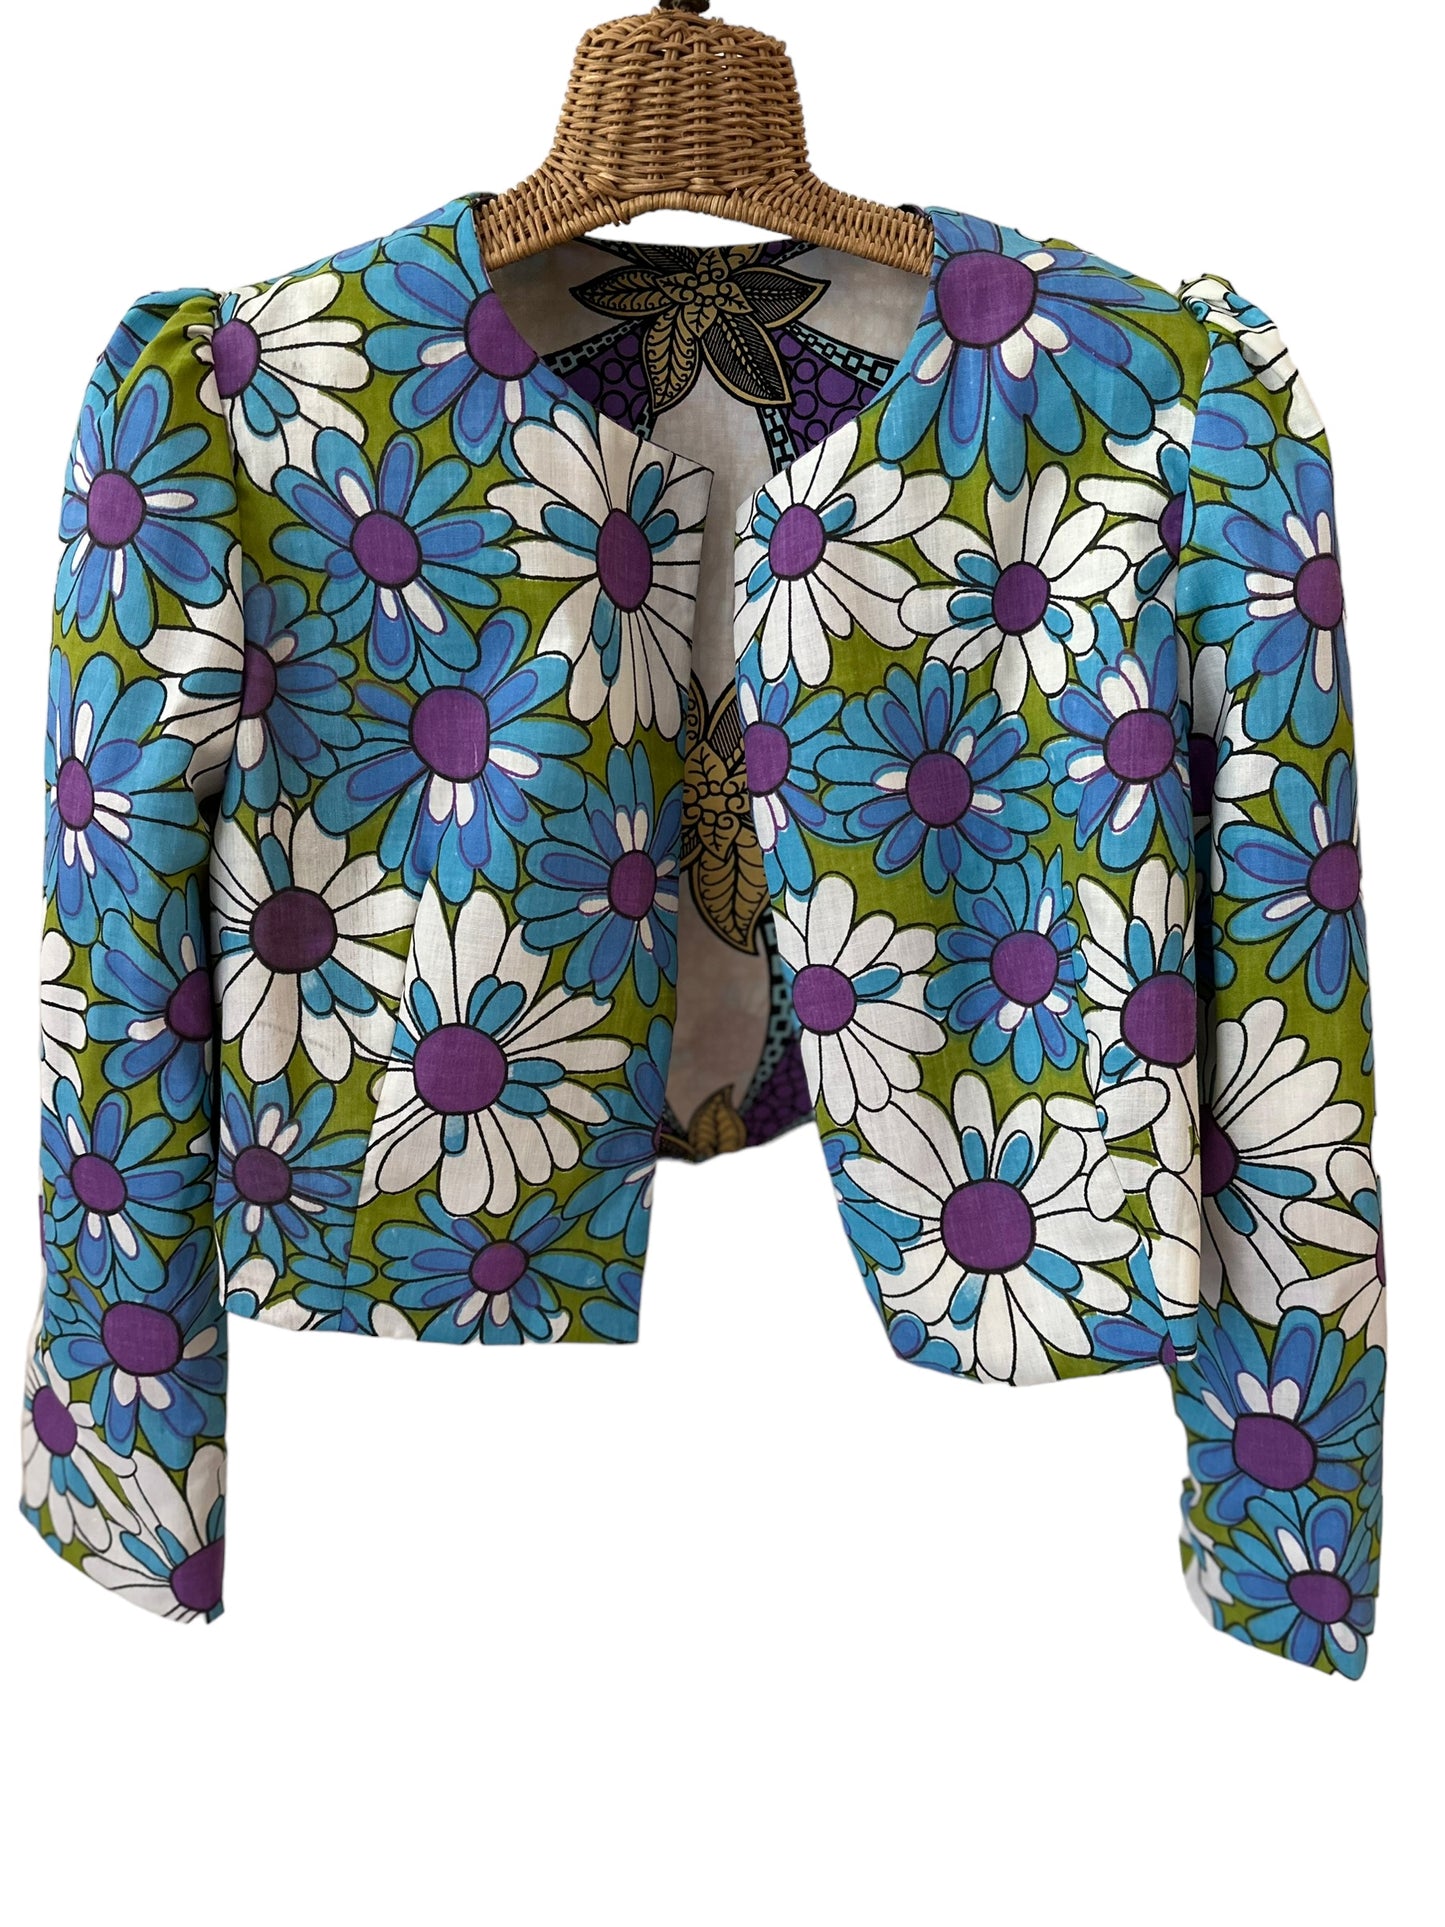 Mila jacket in Daisy/Orchid